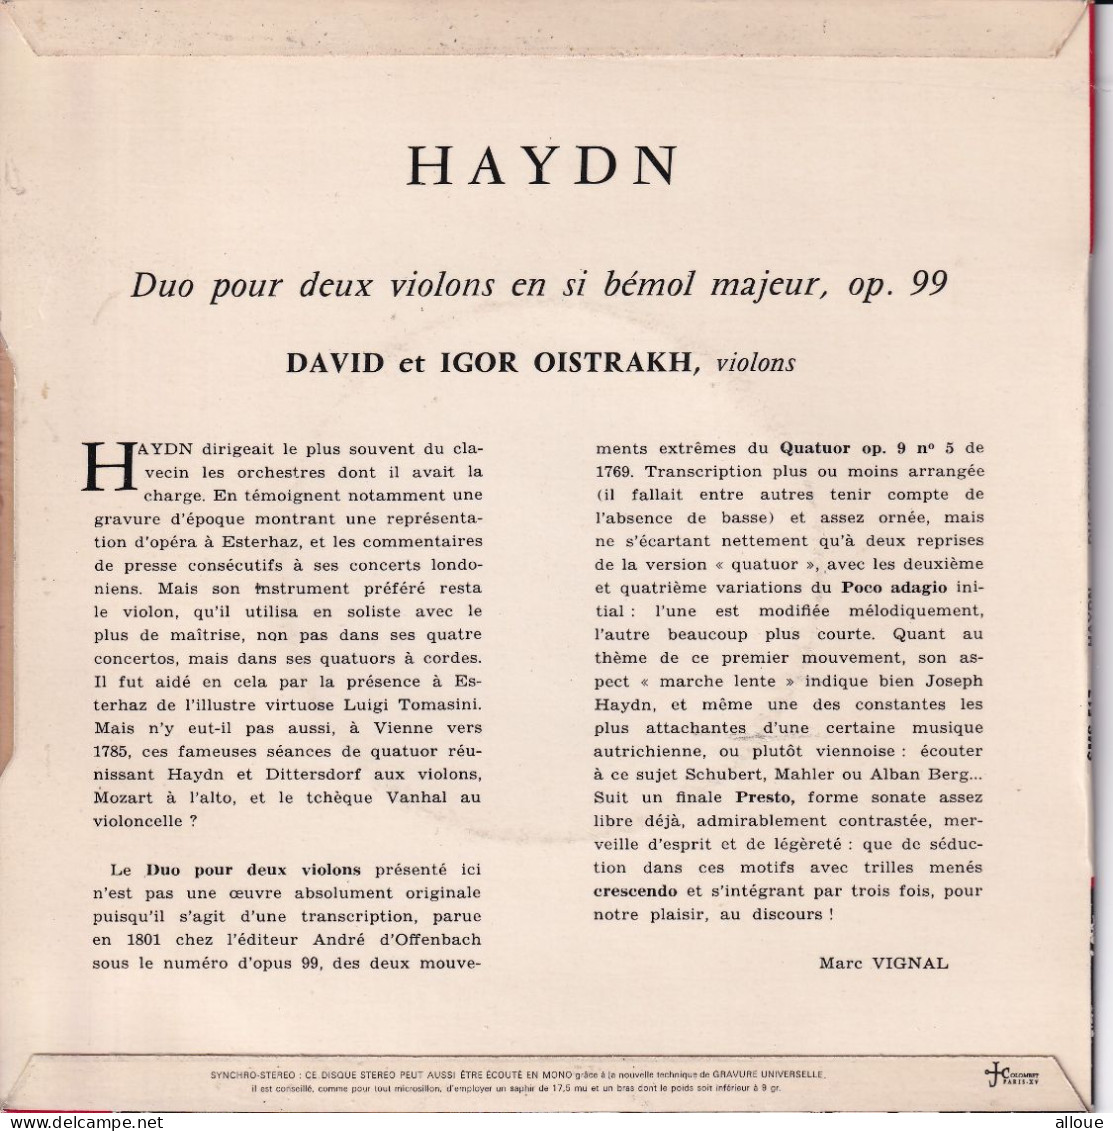 DAVID & IGOR OISTRAKH JOUENT HAYDN - FR EP - DUO POUR DEUX VIOLONS EN SI BEMOL MAJEUR, OP. 99 - Klassik